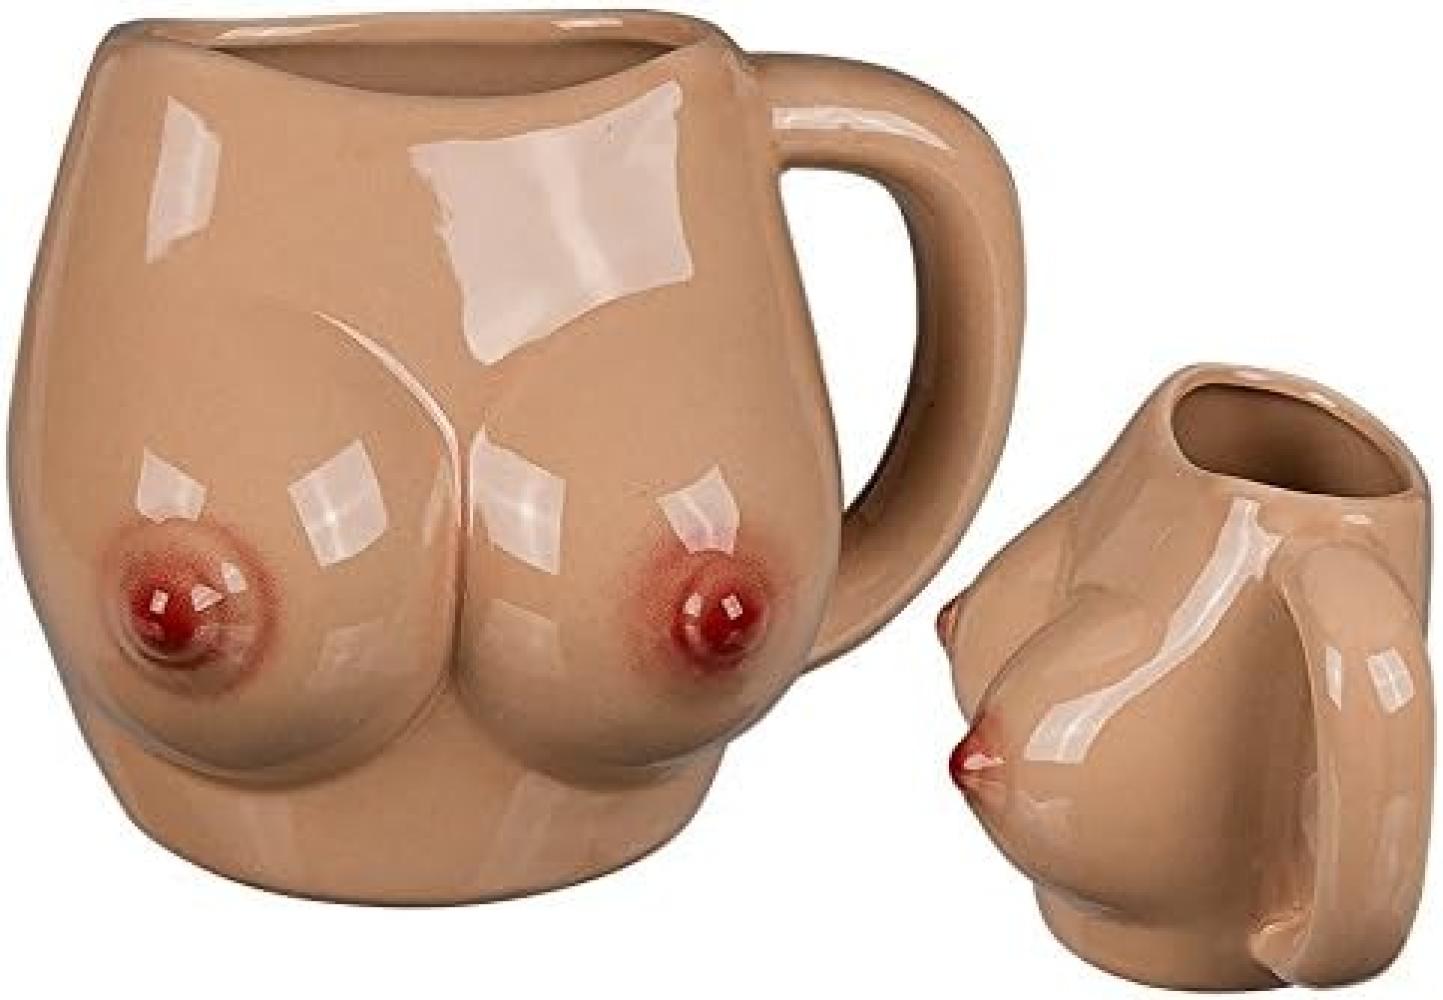 Tasse Brüste Boob Mug Kaffee Tee Becher als Geschenk Junggesellenabschied Fun Bild 1